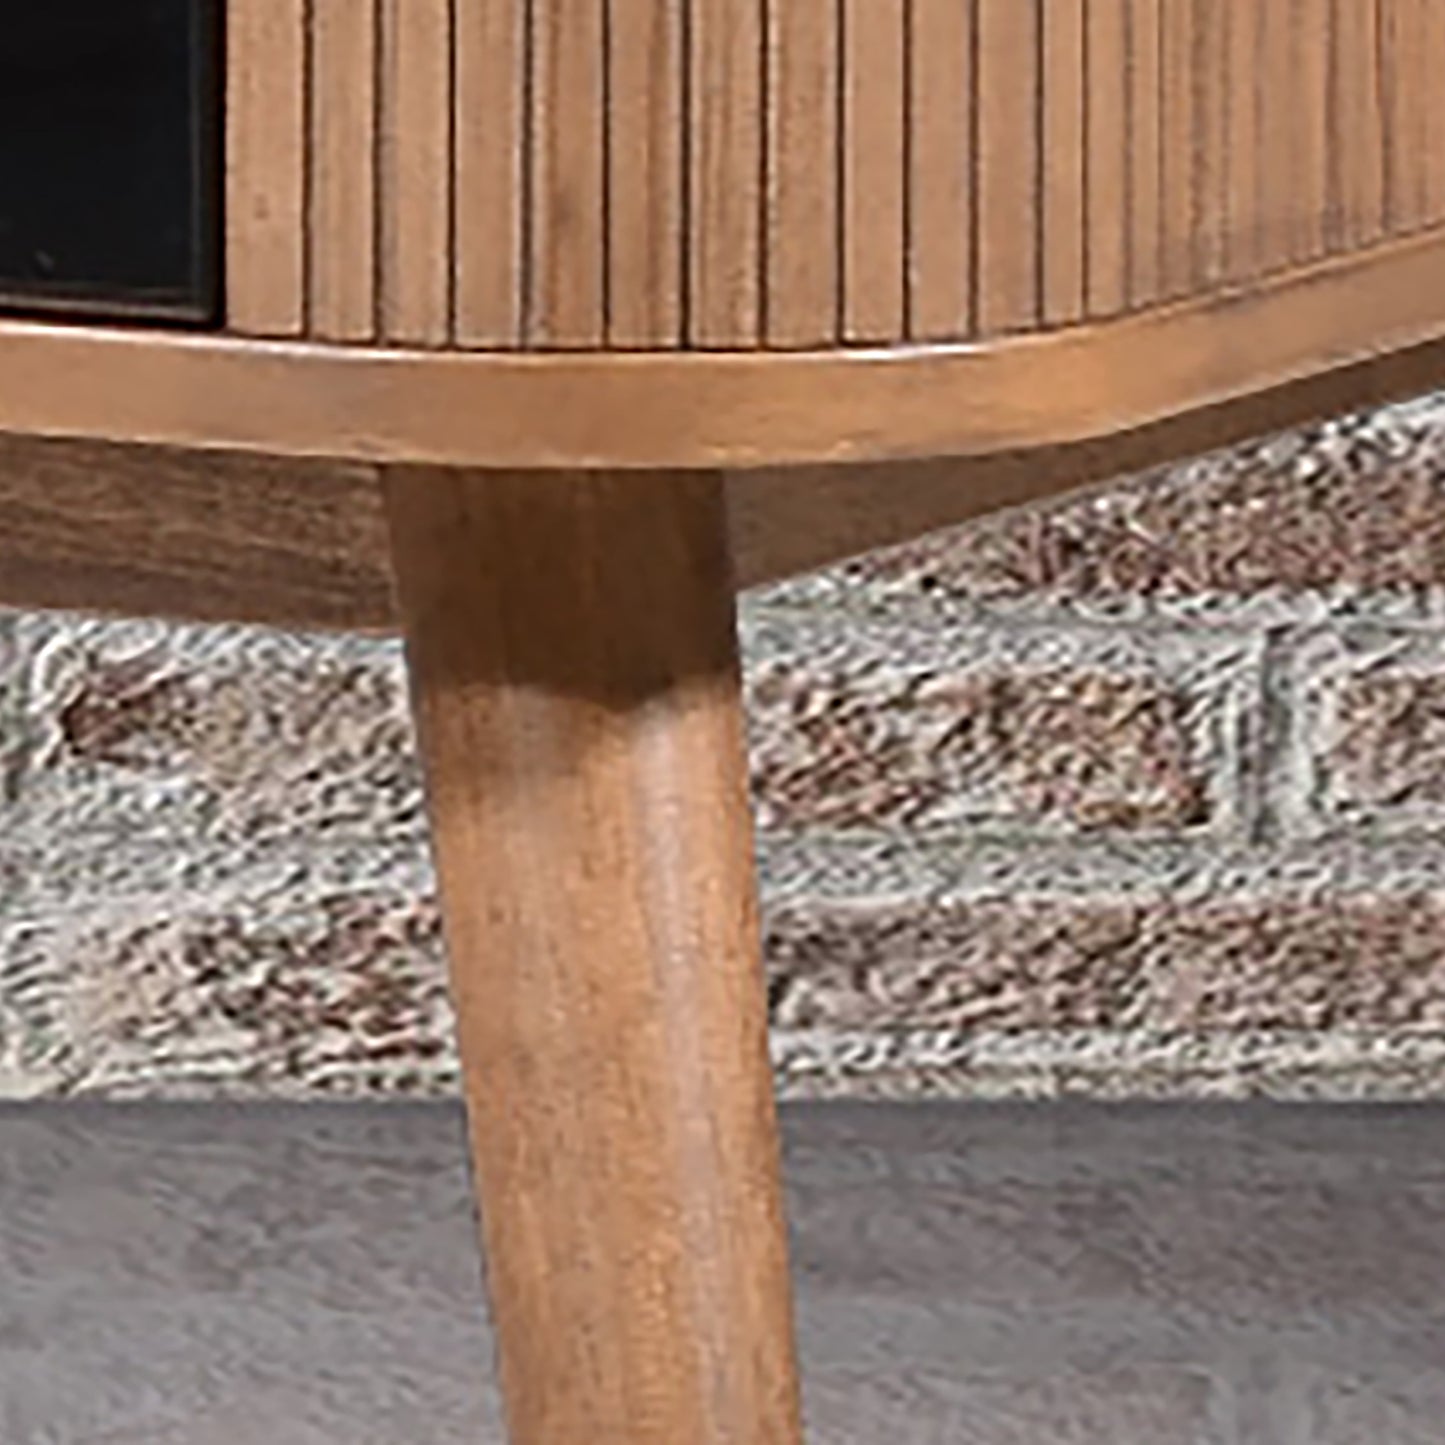 Criterion Denham End Table 550mm Semi-Assembled, Solid Rubber Wood Legs Light Walnut Wood Veneer